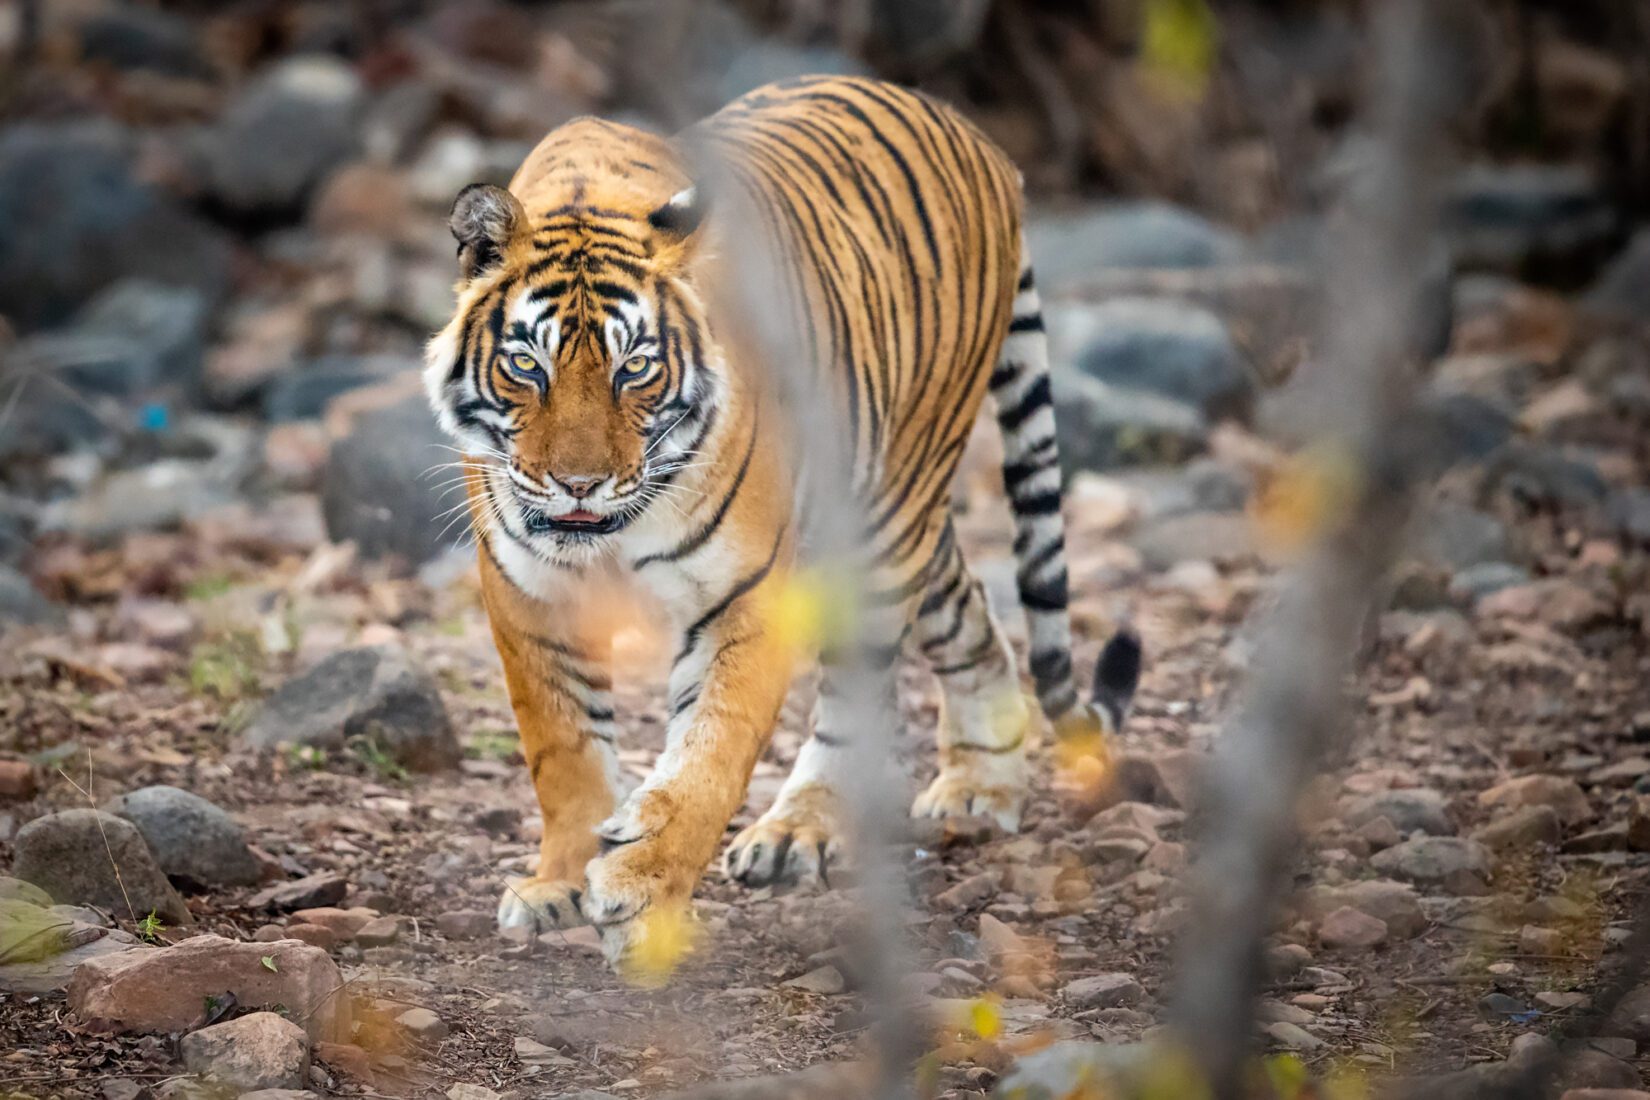 Tiger walking on rocky path